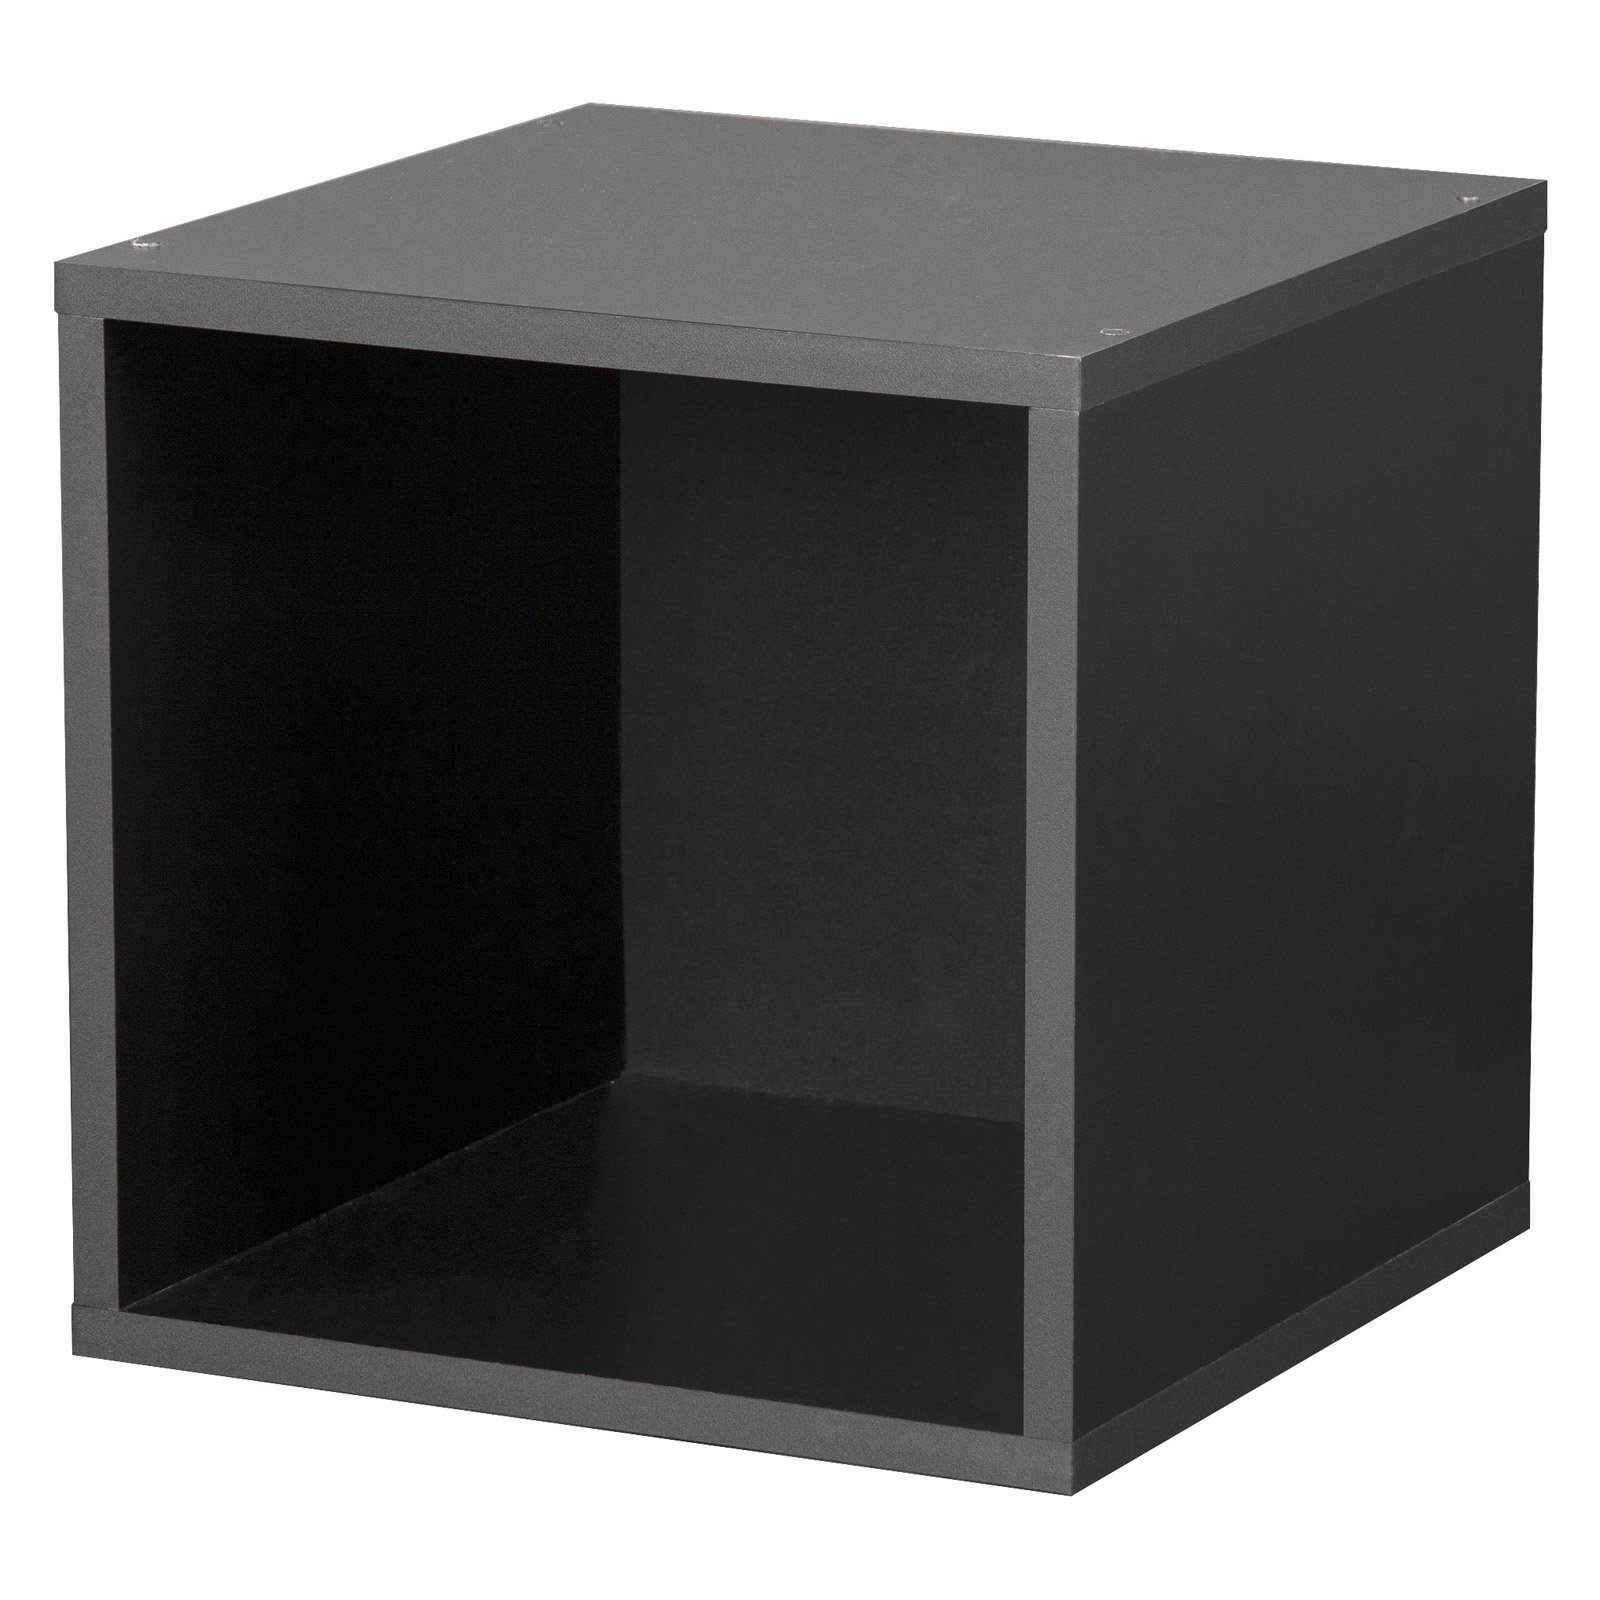 Modular Open Cube, Black - image 1 of 3